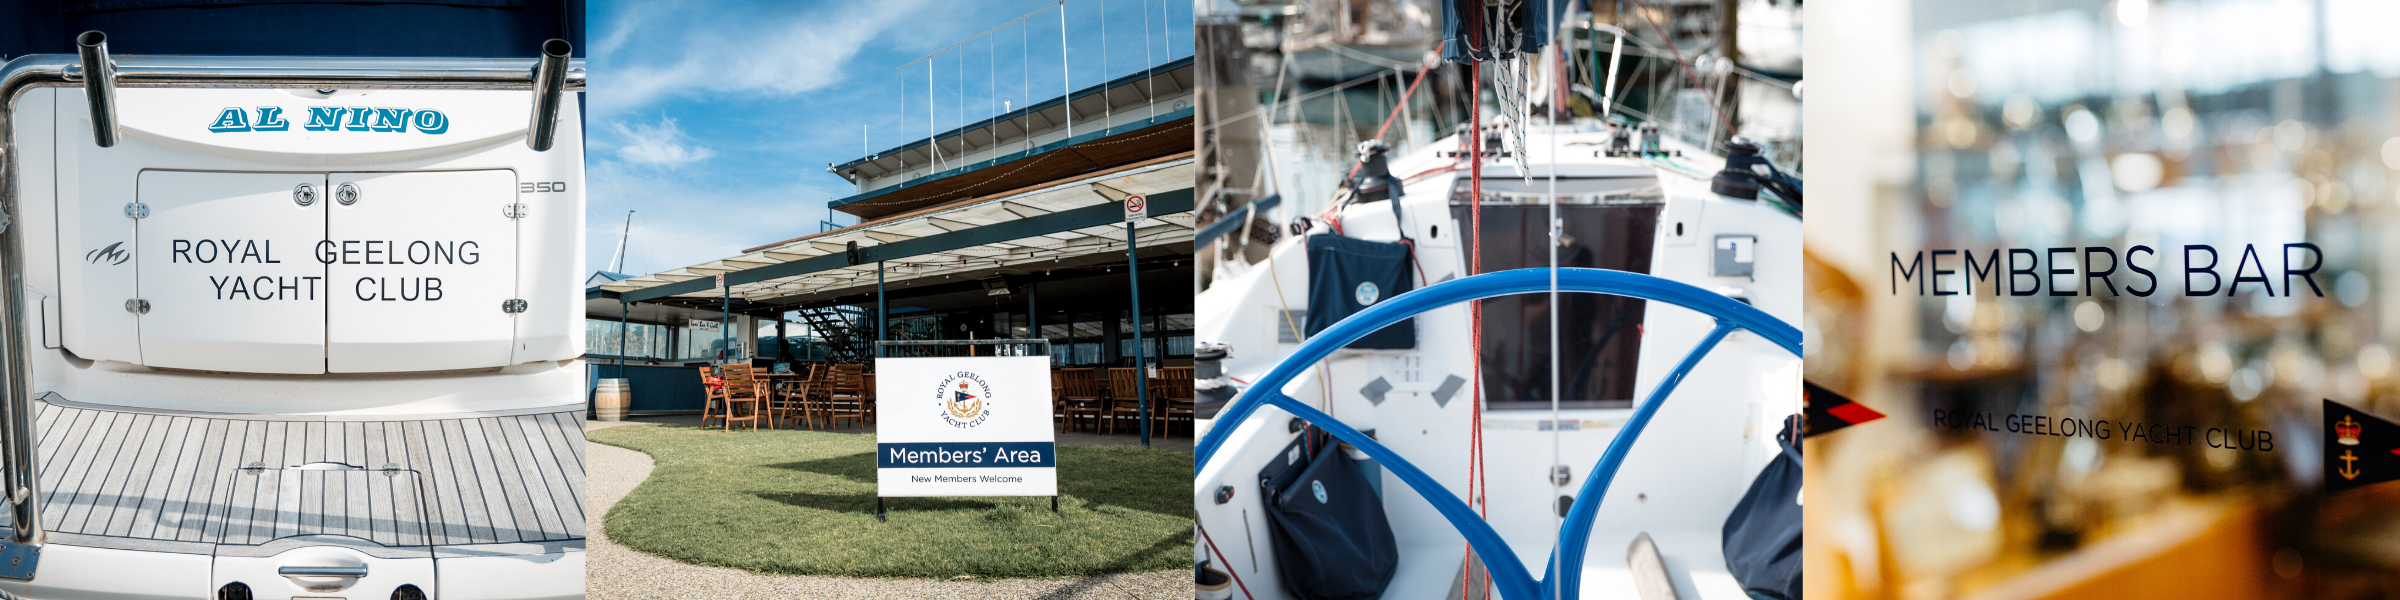 Royal Geelong Yacht Club, Gold Membership